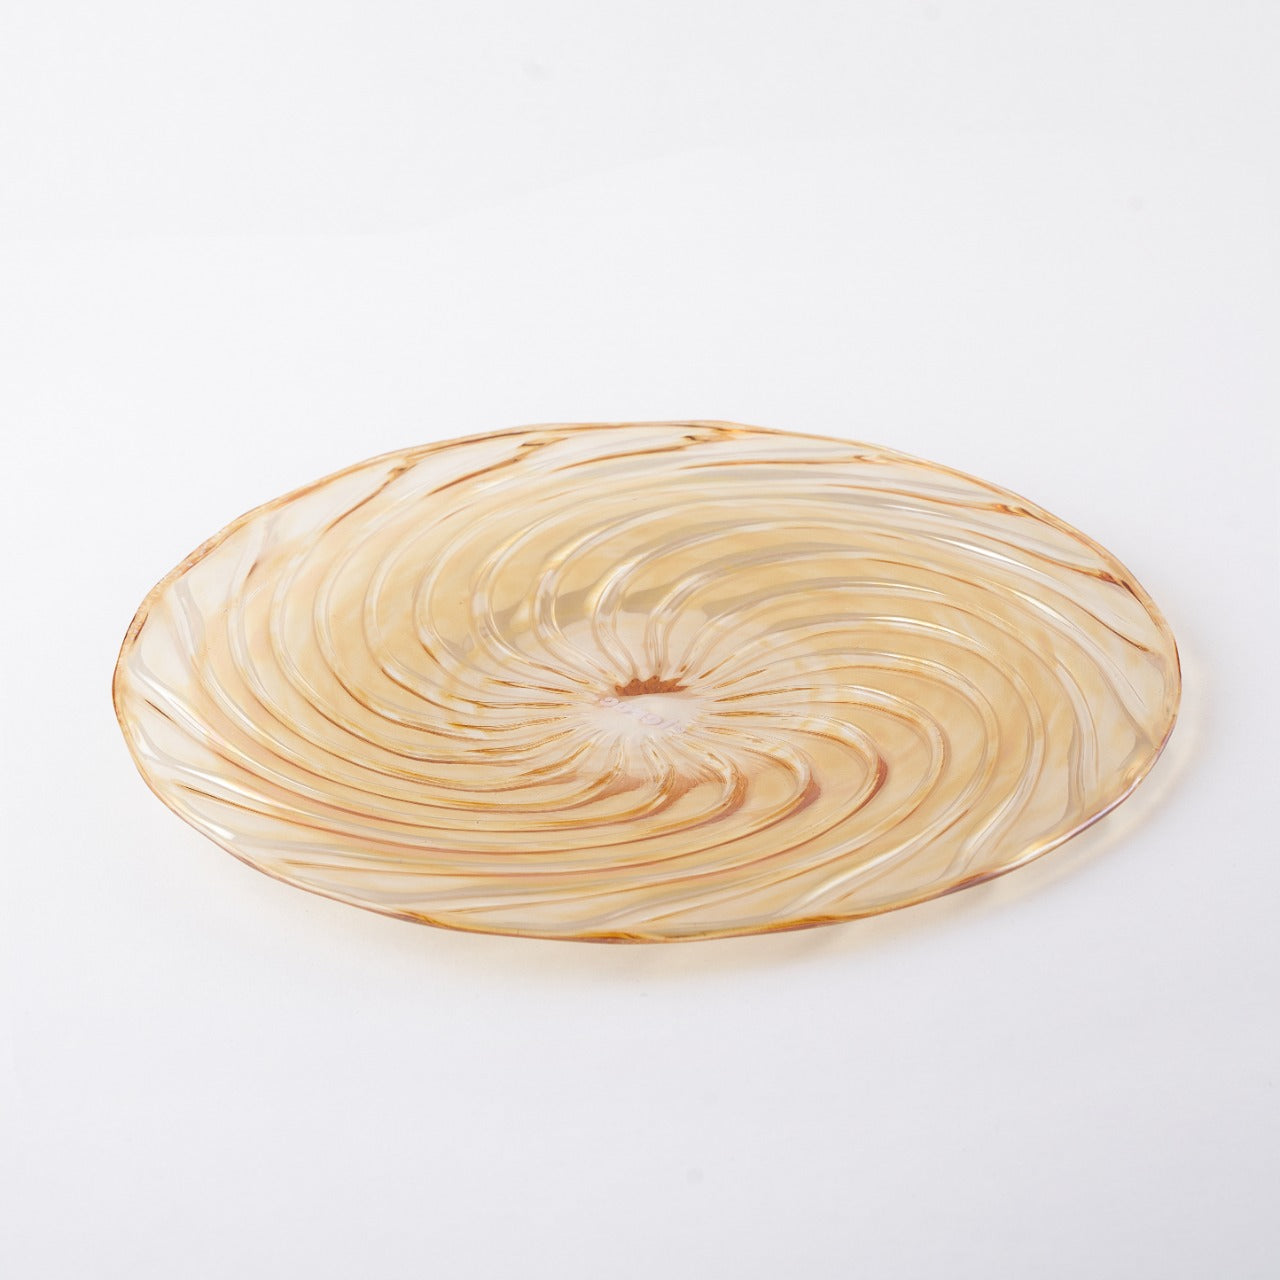 Rambassy - Hand Blown Glass Swirl Serving Plate